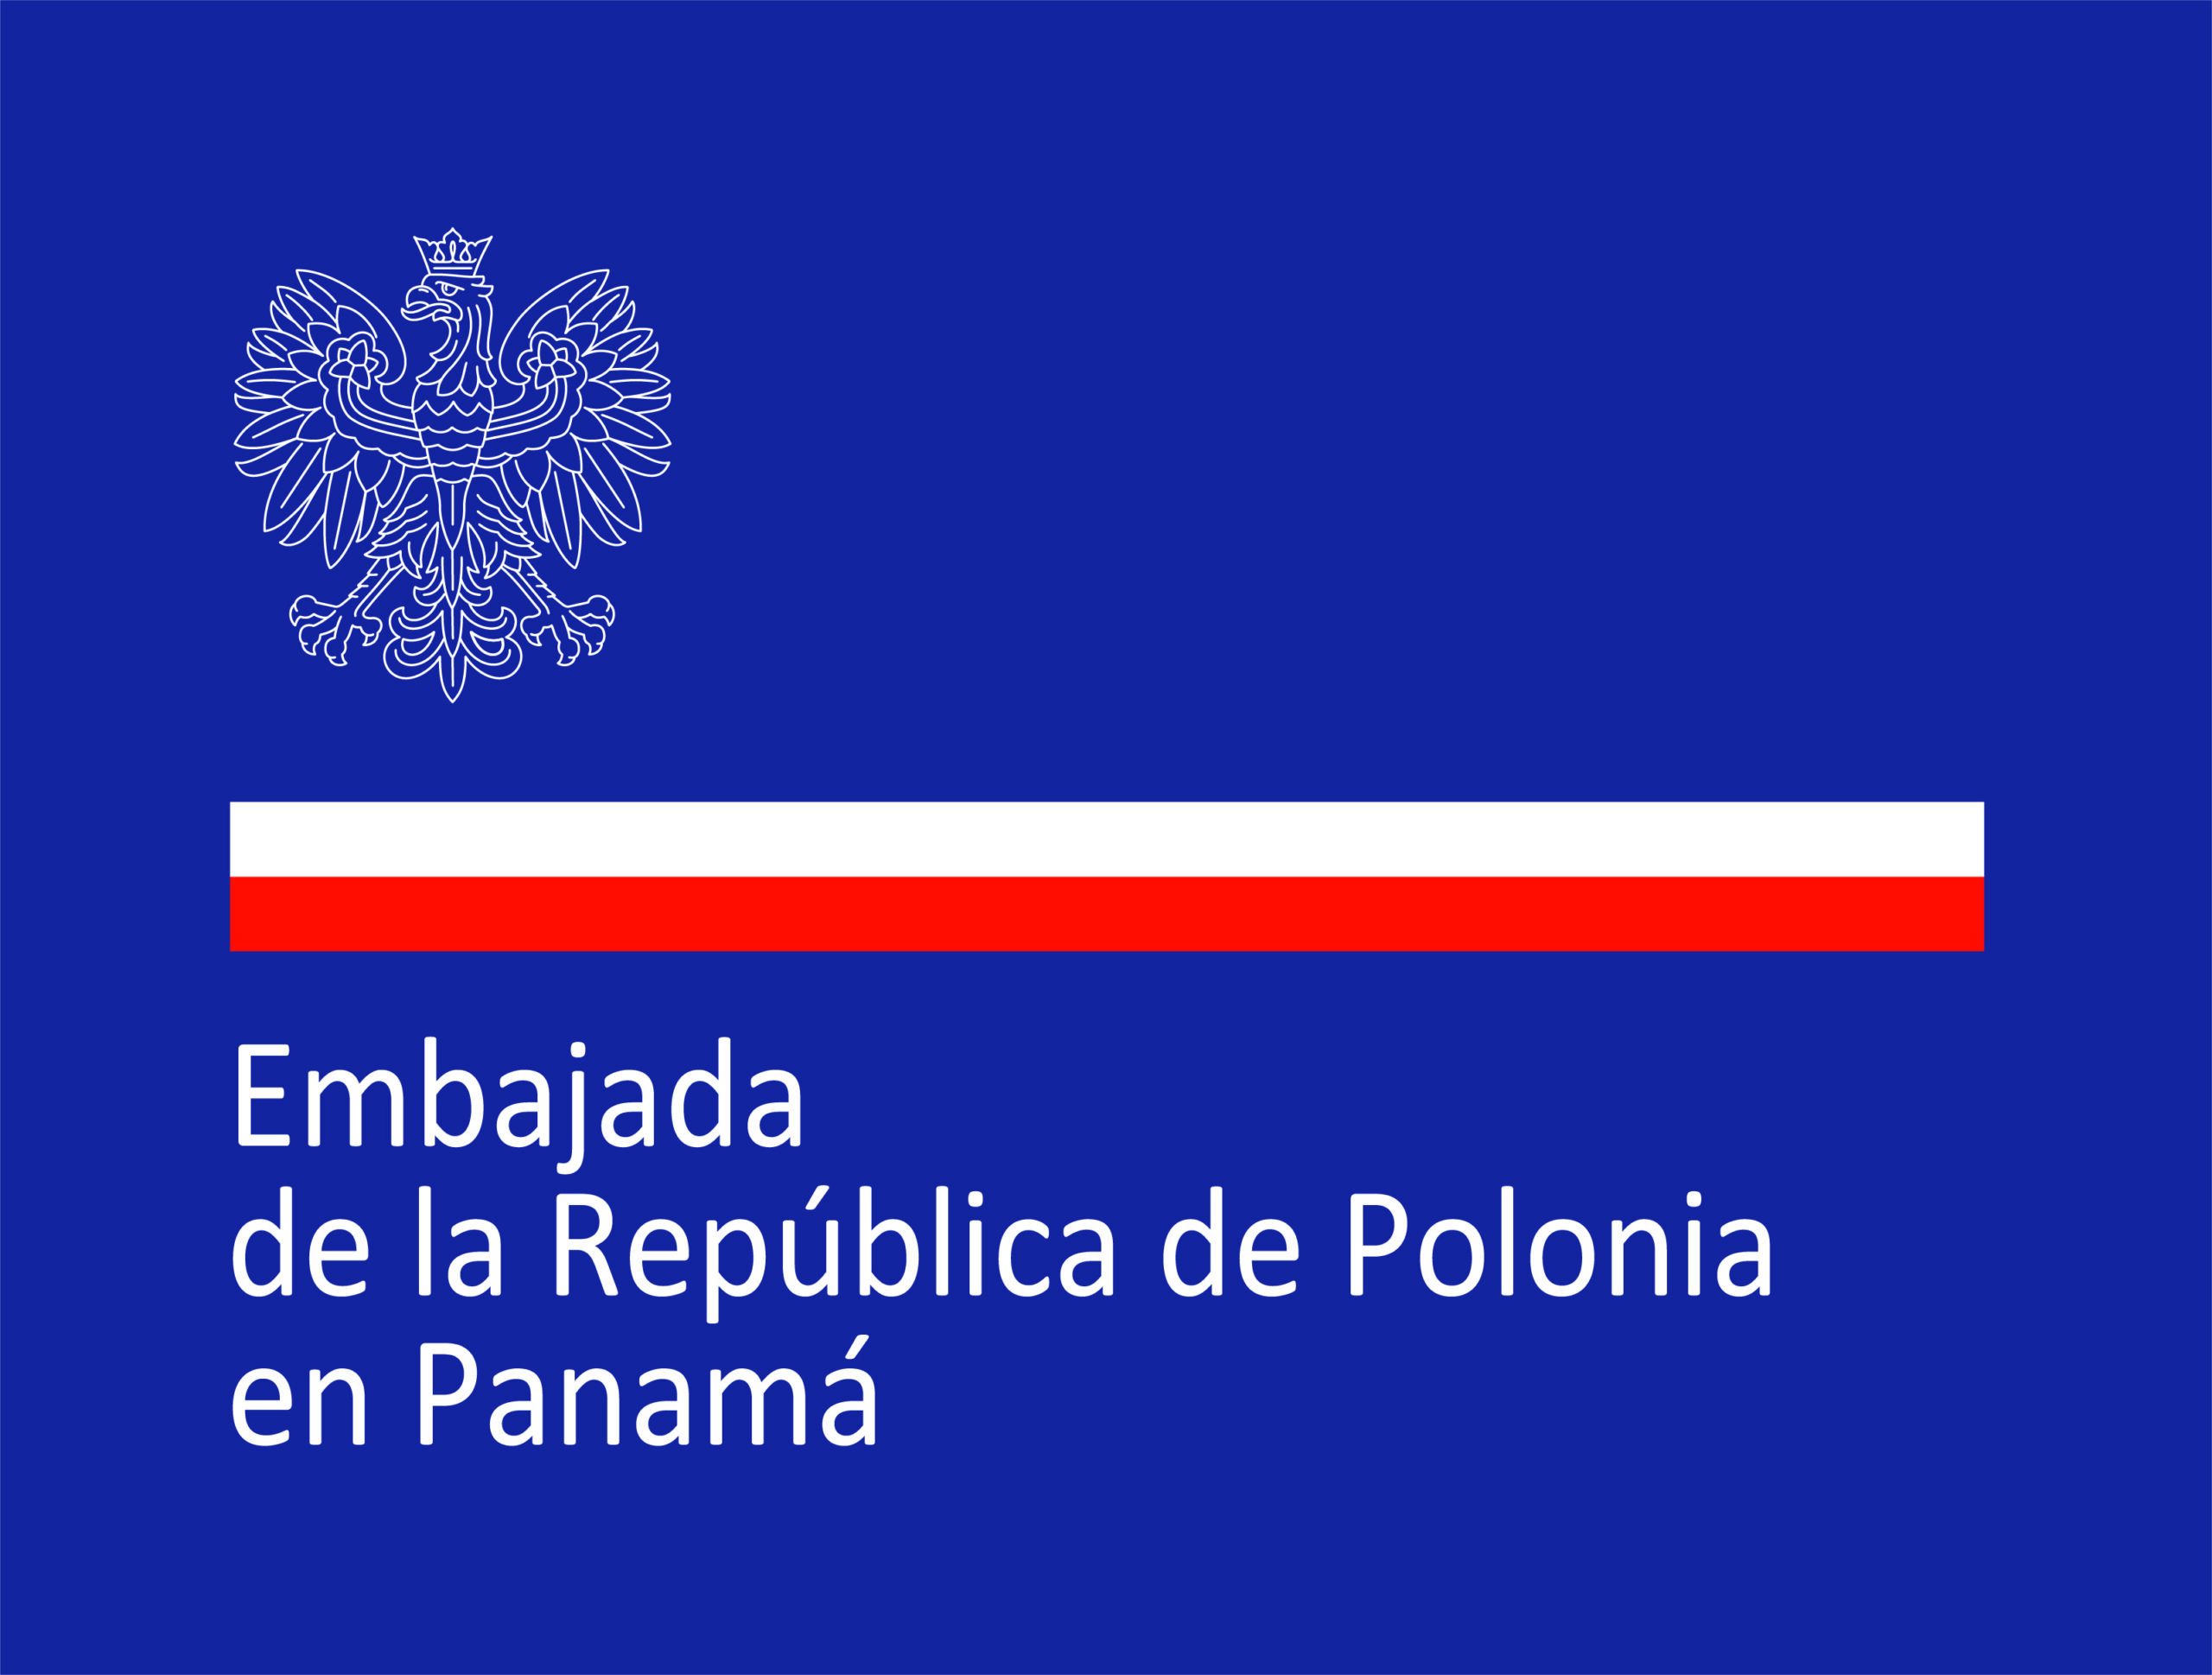 Embajada polonia